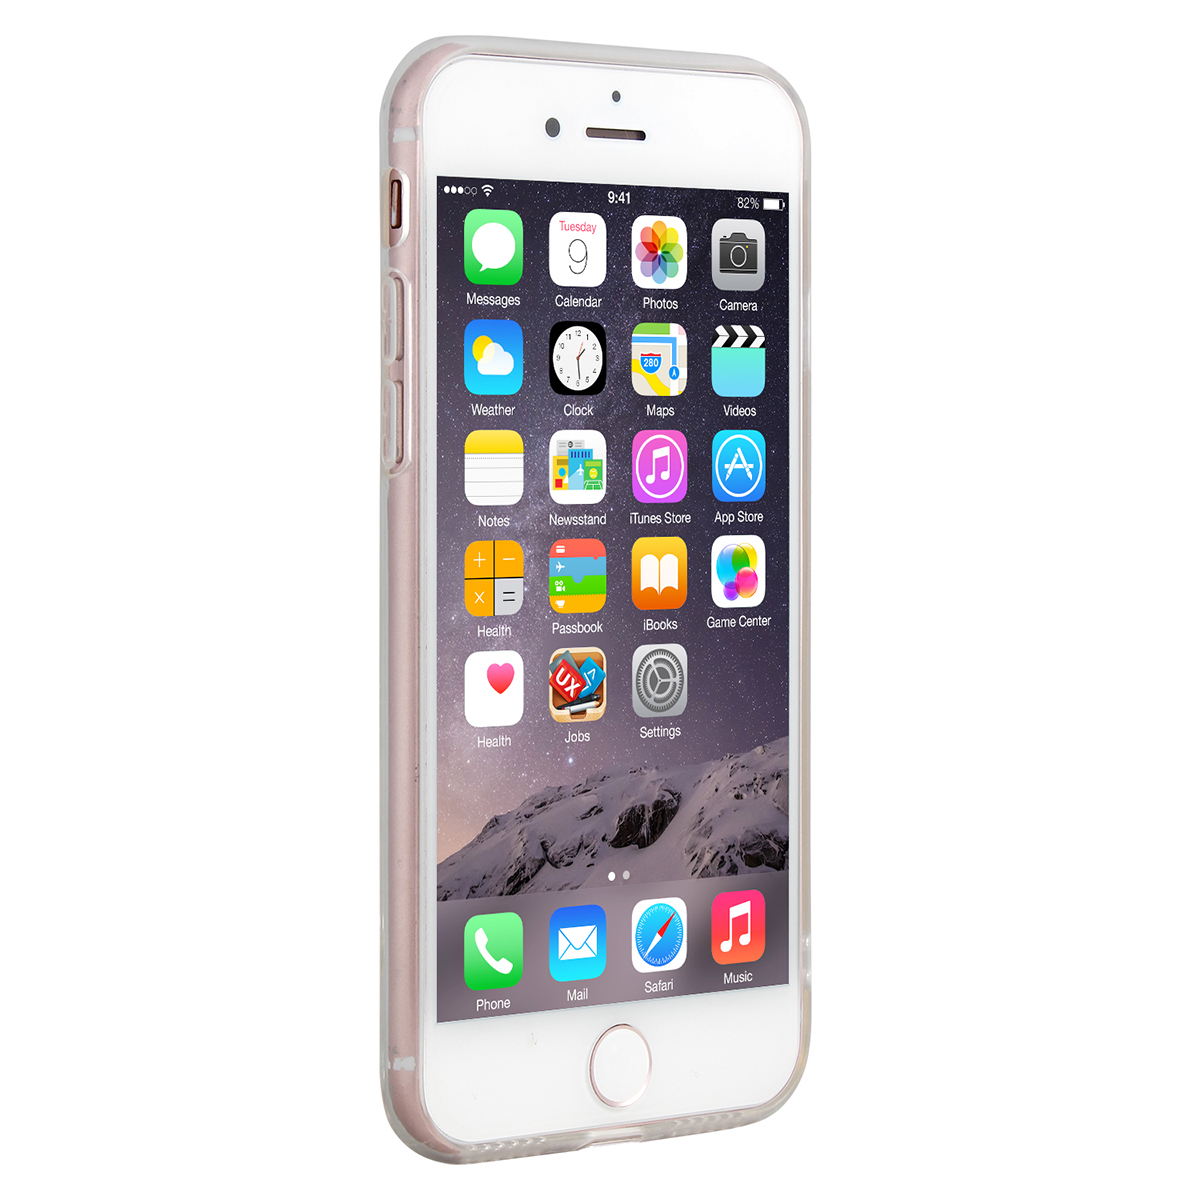 New Slim Soft TPU Transparent Printing Phone Case for iPhone 7 - Avocado